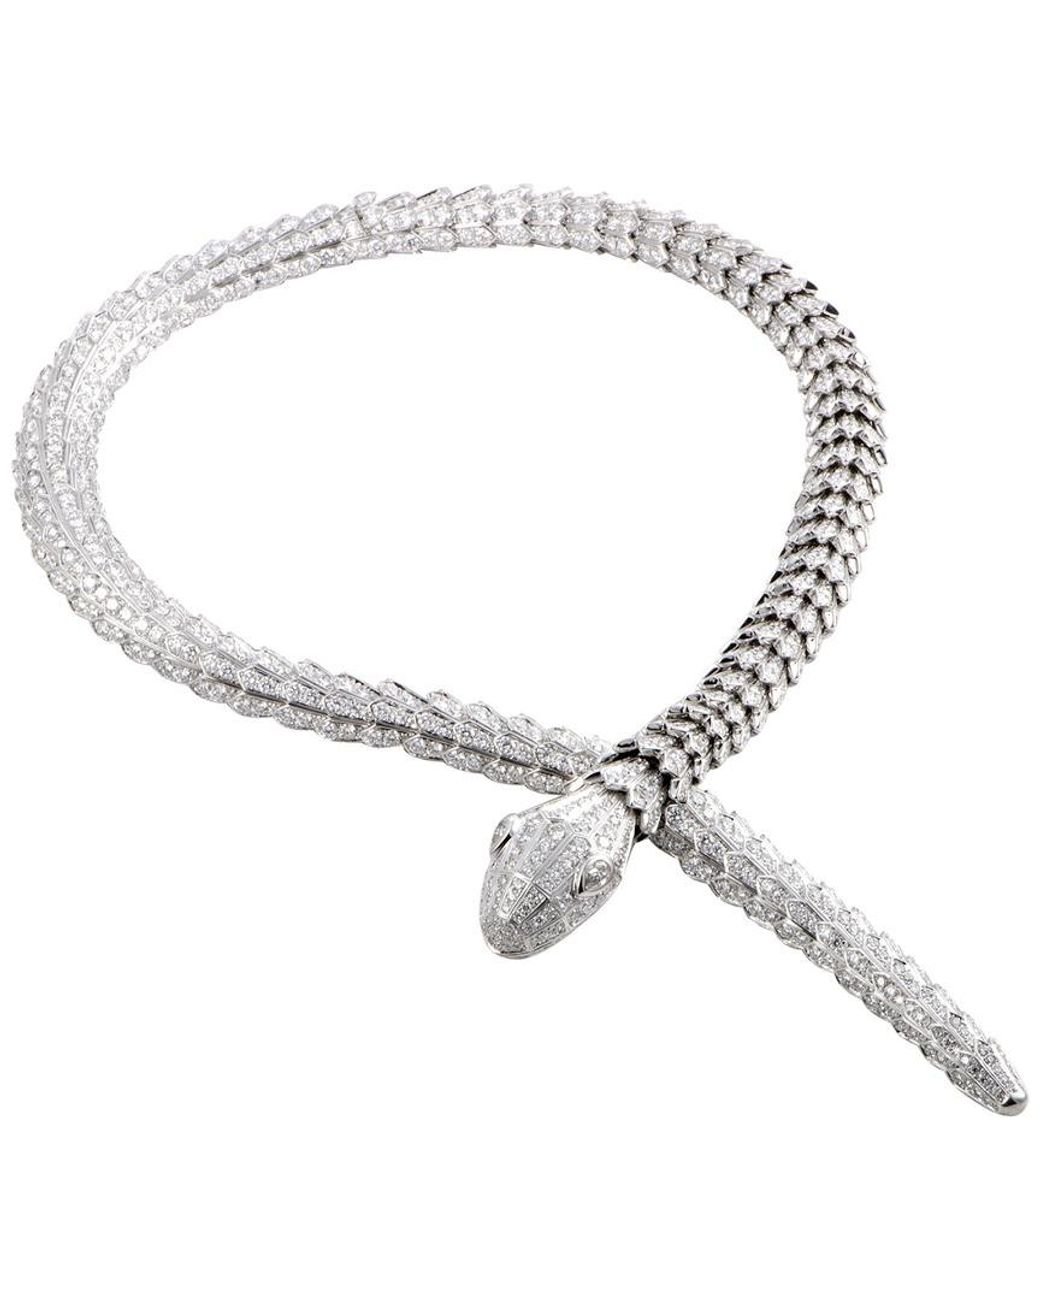 BVLGARI Bulgari Serpenti 18k Necklace in Metallic | Lyst UK